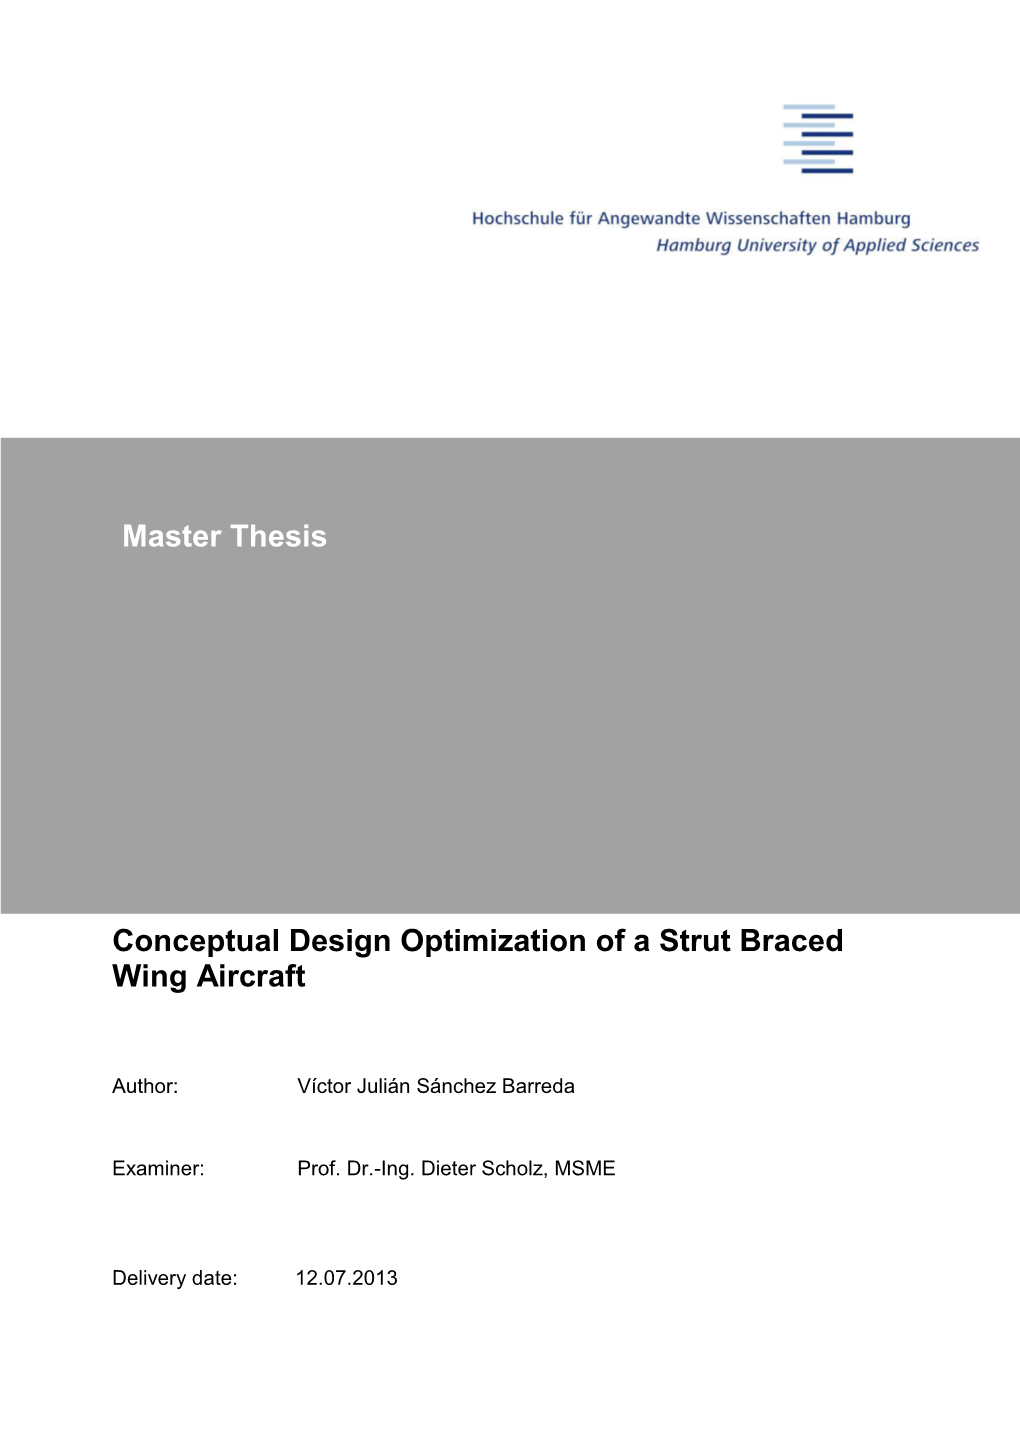 Conceptual Design Optimization of a Strut Braced Wing Aircraft